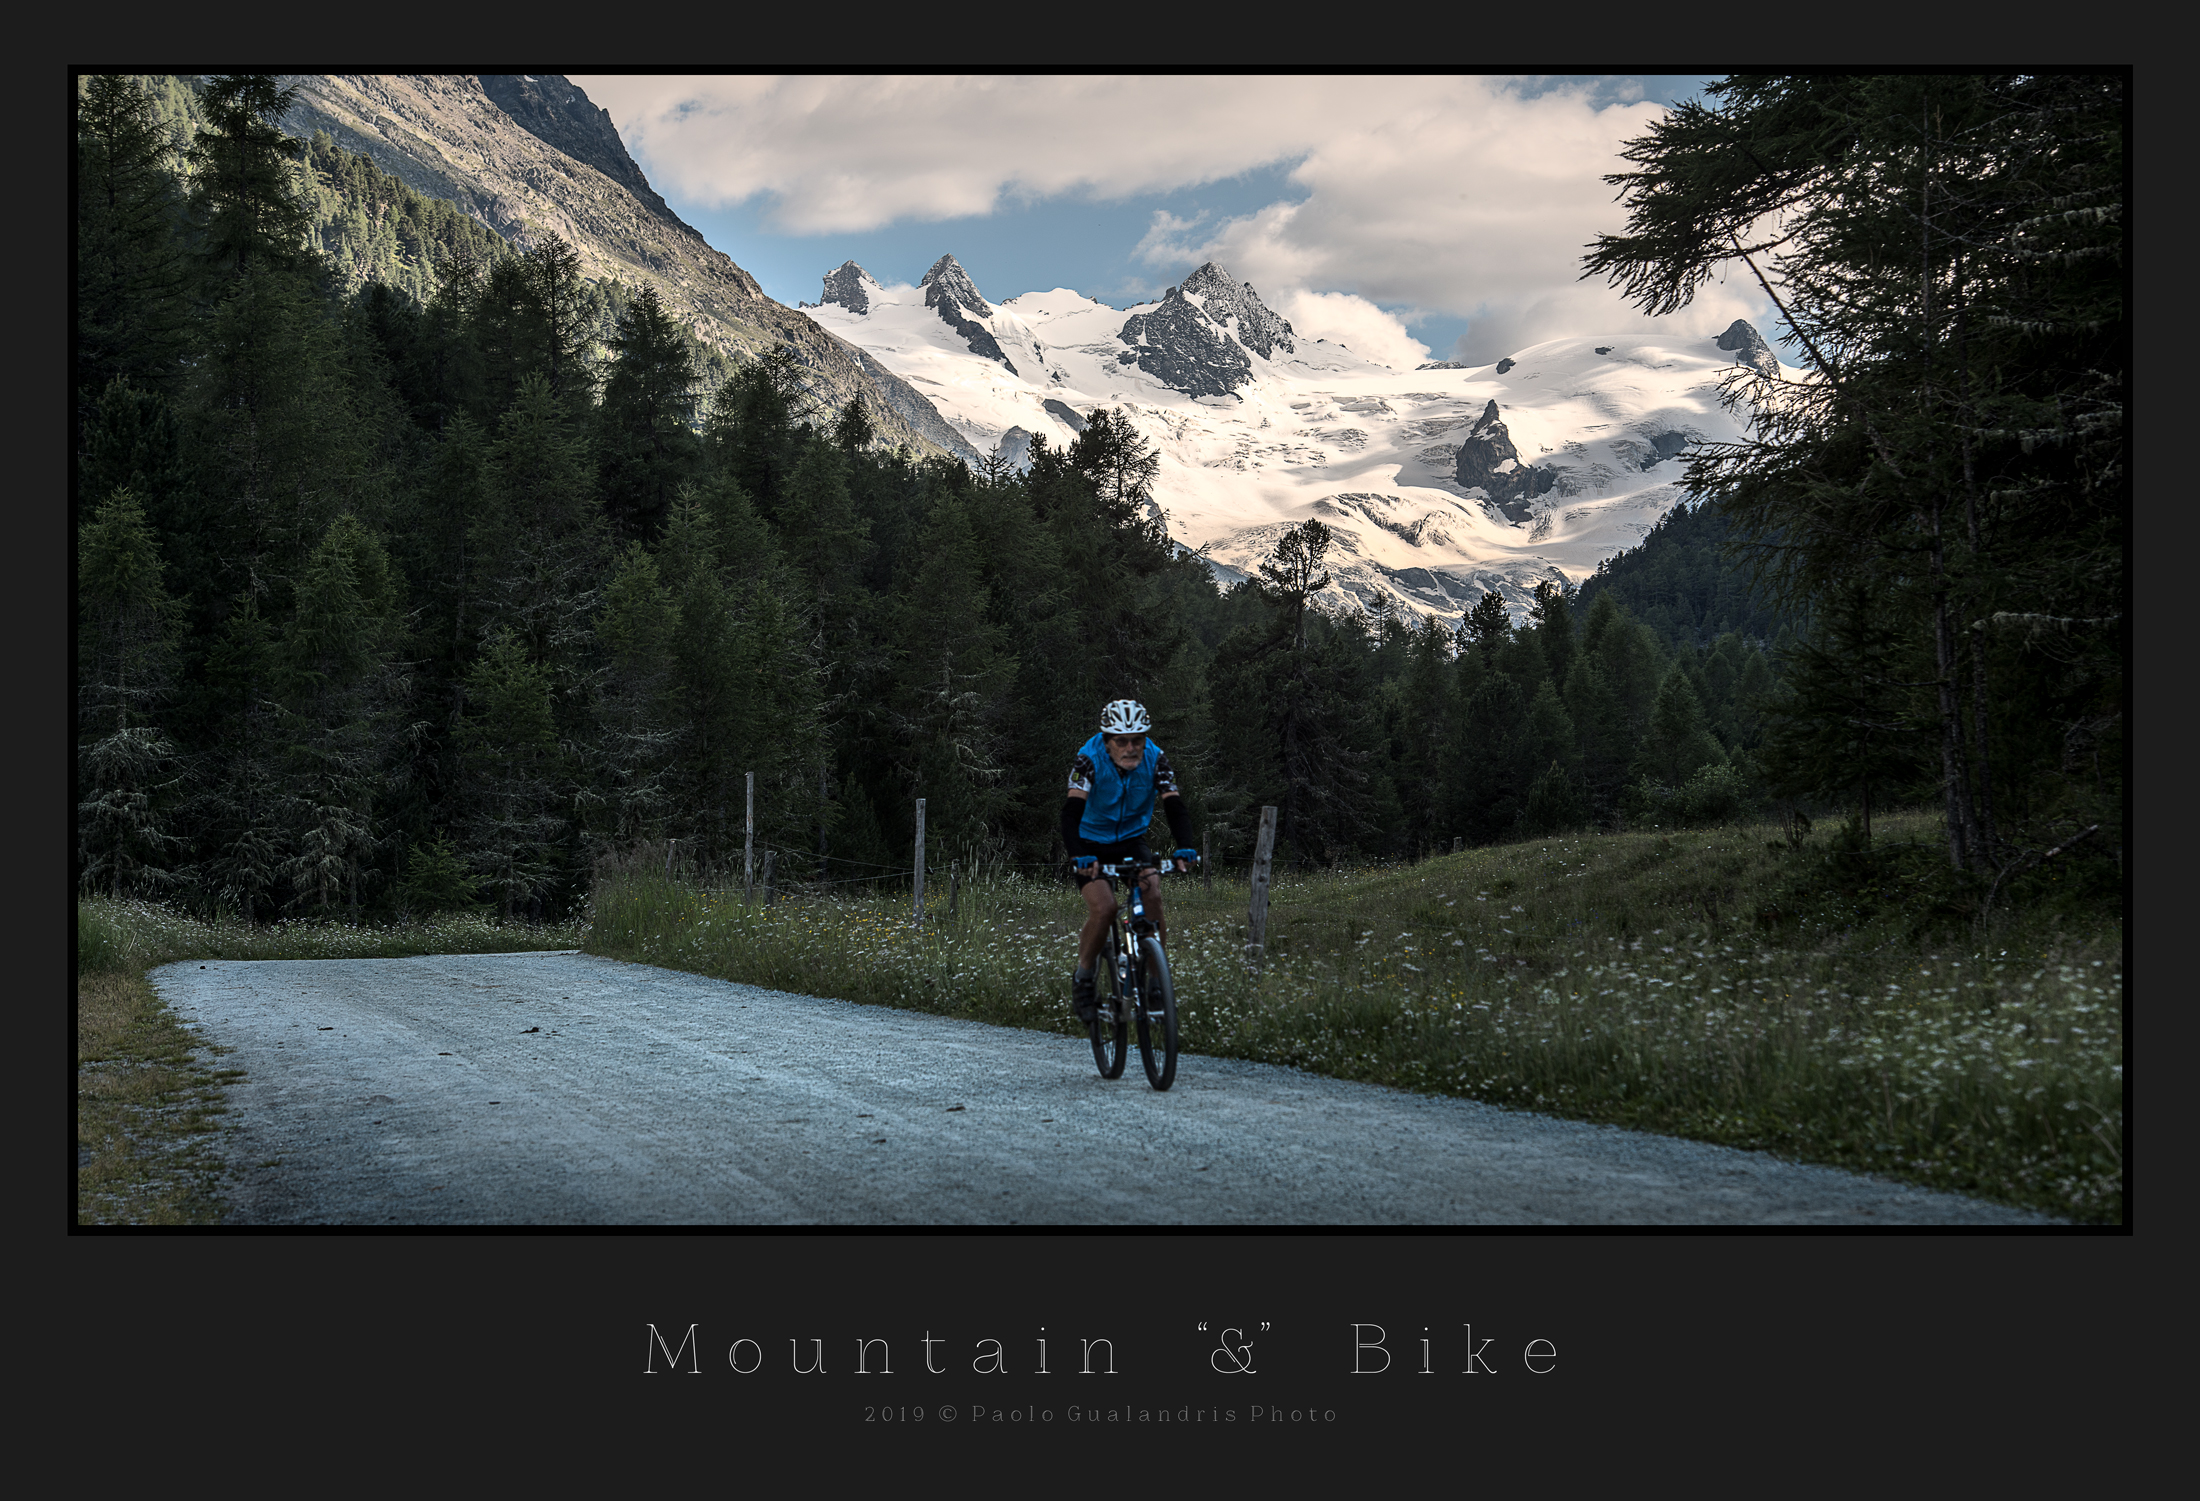 Mountain "&" Bike...